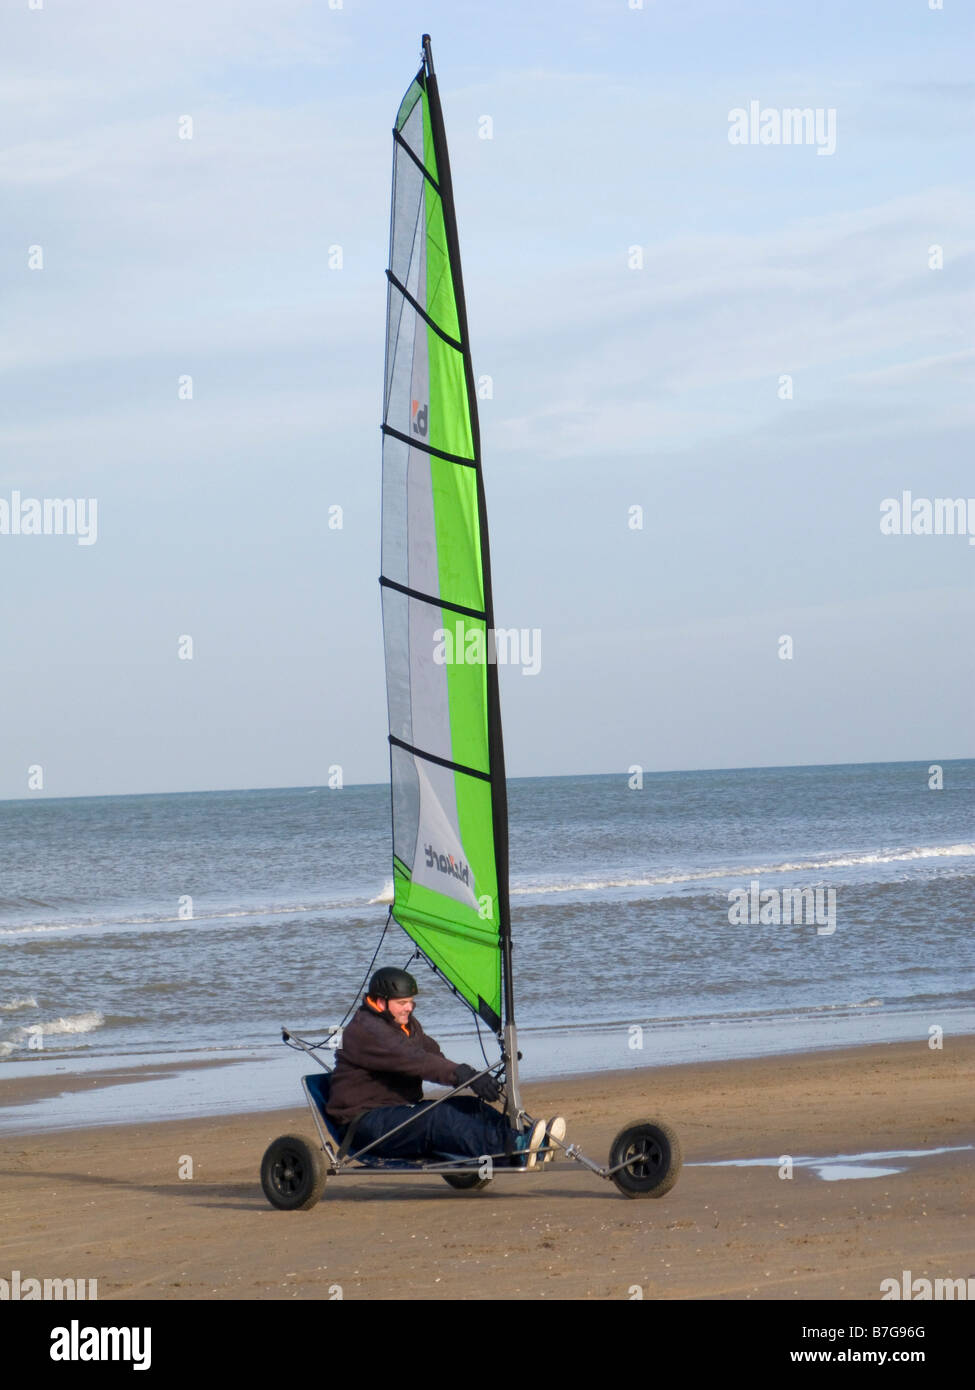 Land Windsurfing, Scheveningen, The Hague, Netherlands Stock Photo - Alamy